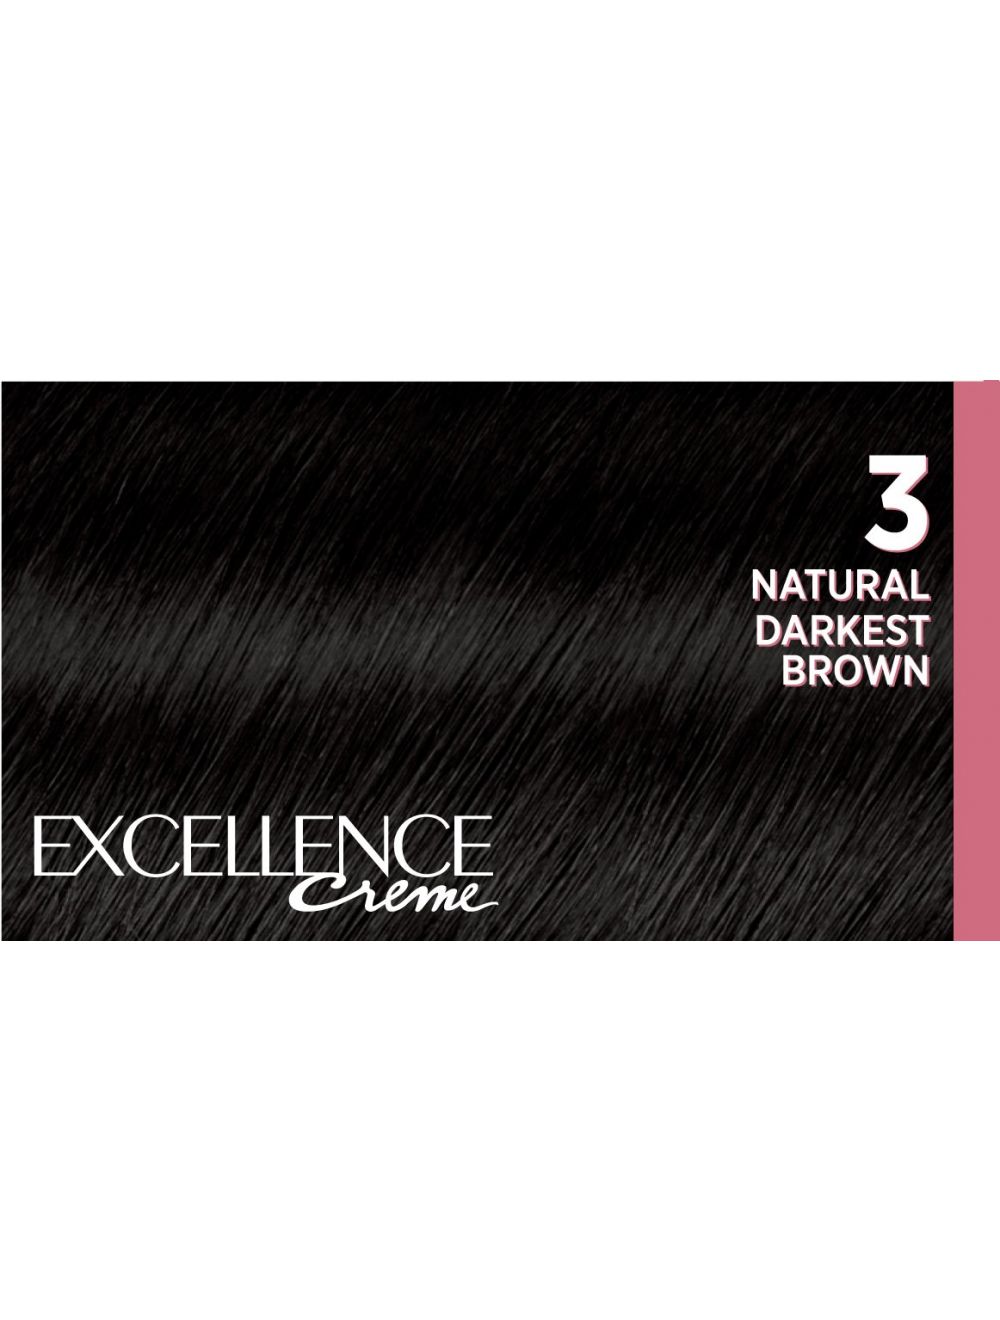 L'Oreal Paris Excellence Creme Hair Color-3 Natural Darkest Brown - Niram